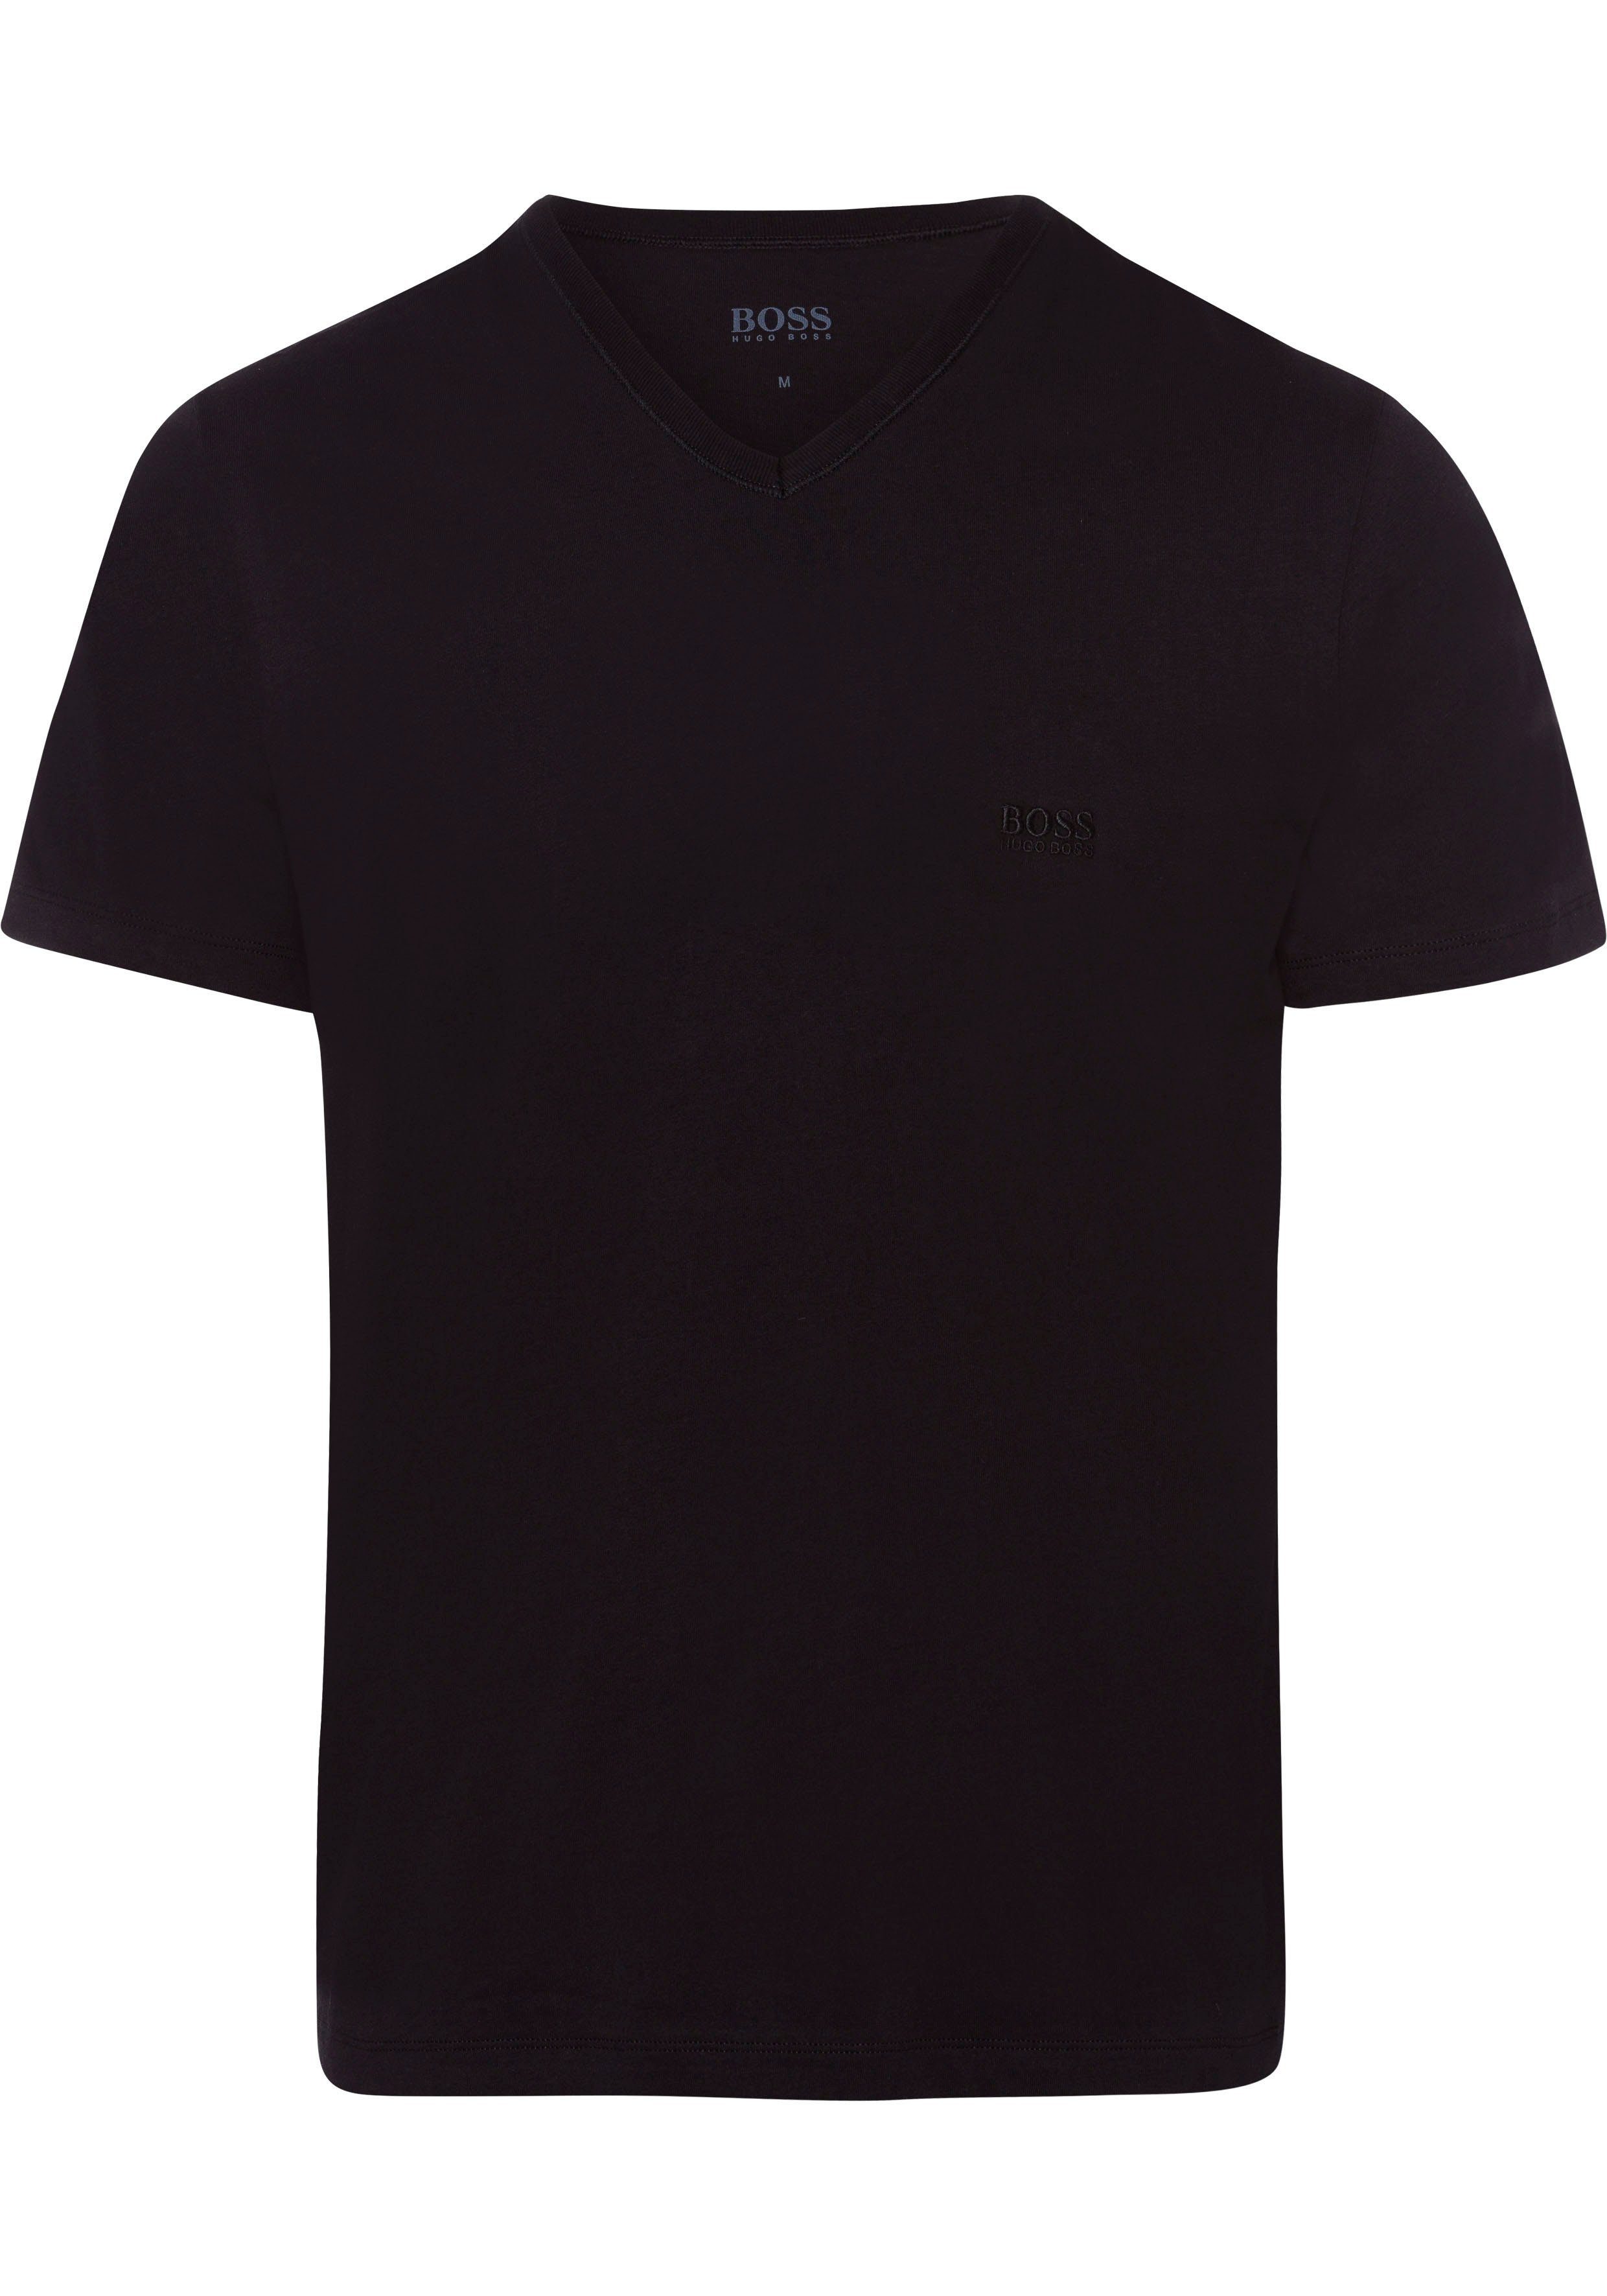 BOSS V-Shirt T-Shirt VN CO 3P black (Packung)